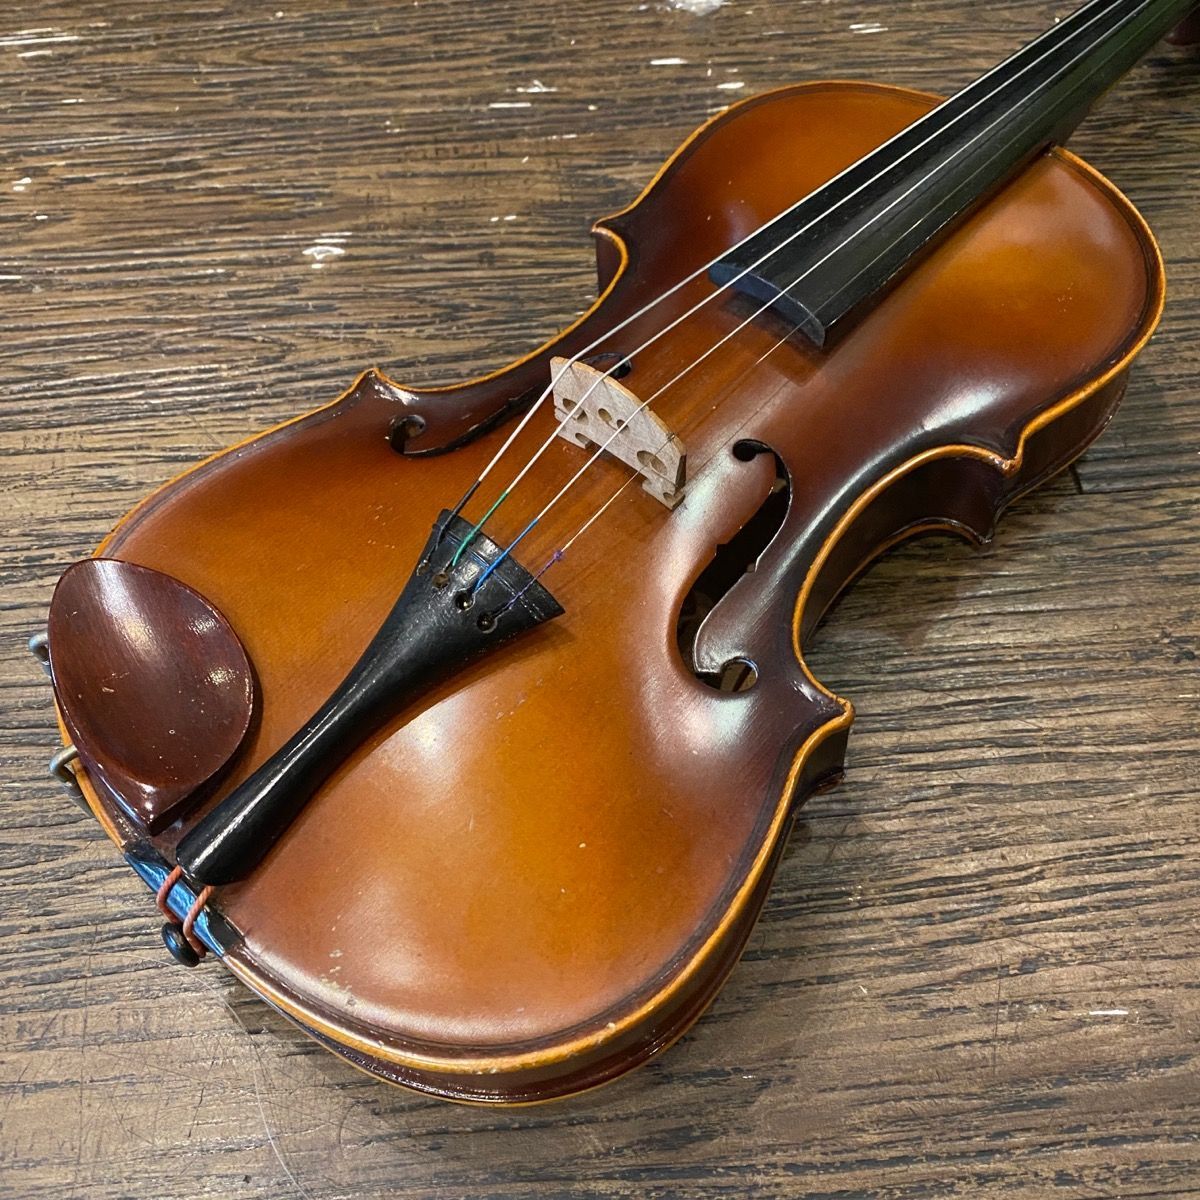 Kiso Fukushima No.3 1/2 Antonio Stradivarius Violin 木曽 福島 バイオリン - x138 -  メルカリ